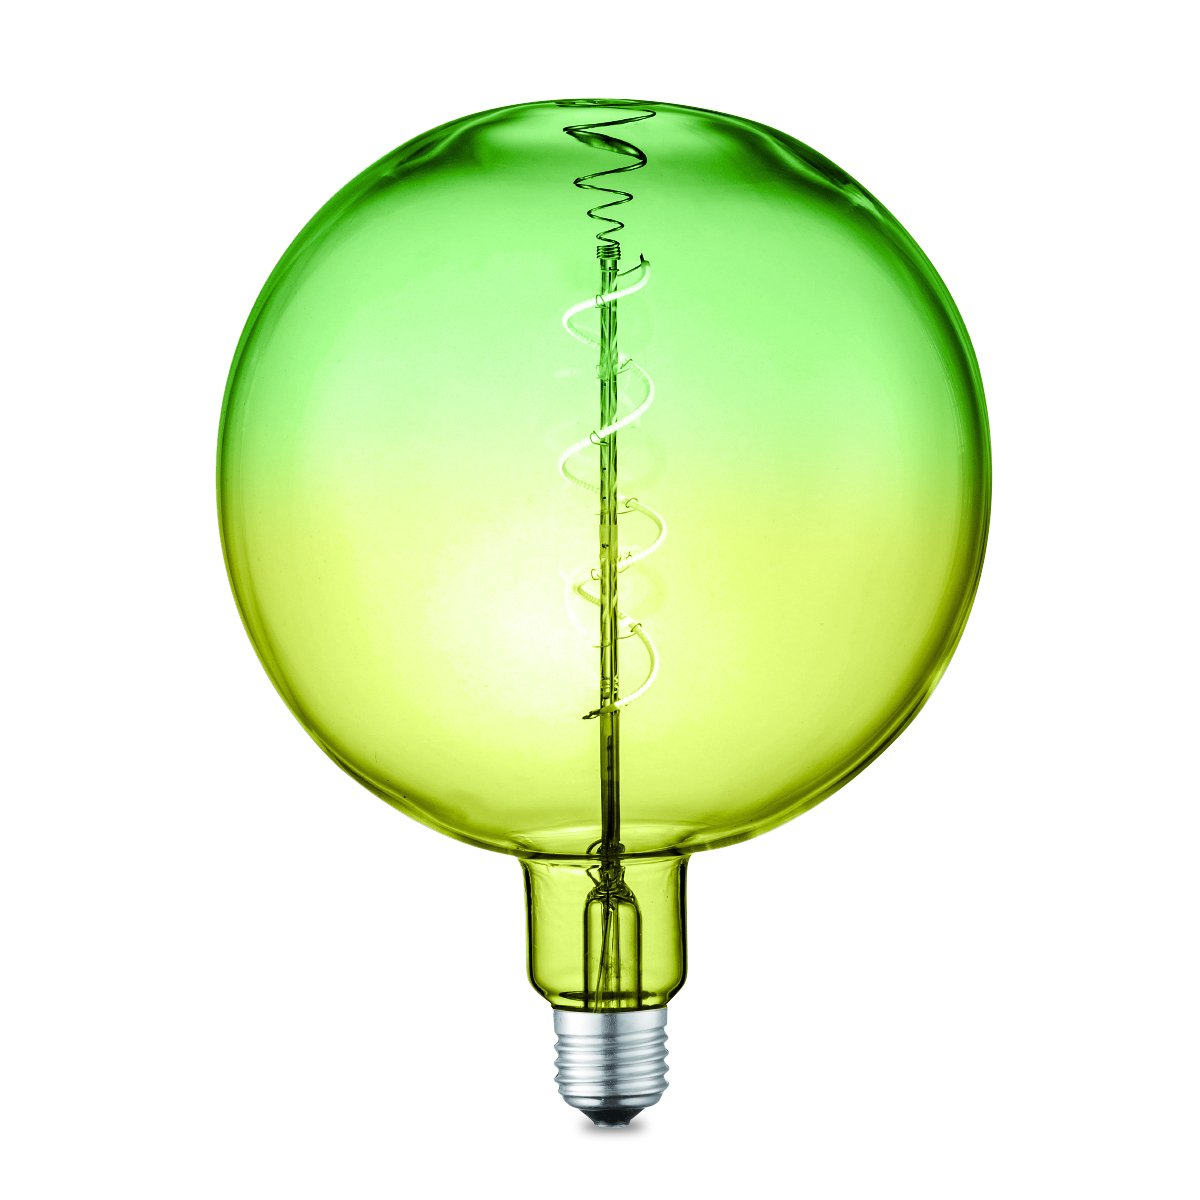 Tangla lighting - TLB-9007-04L - LED Light Bulb Single Spiral filament - G180 4W gradient color bulb - dusk - non dimmable - E27